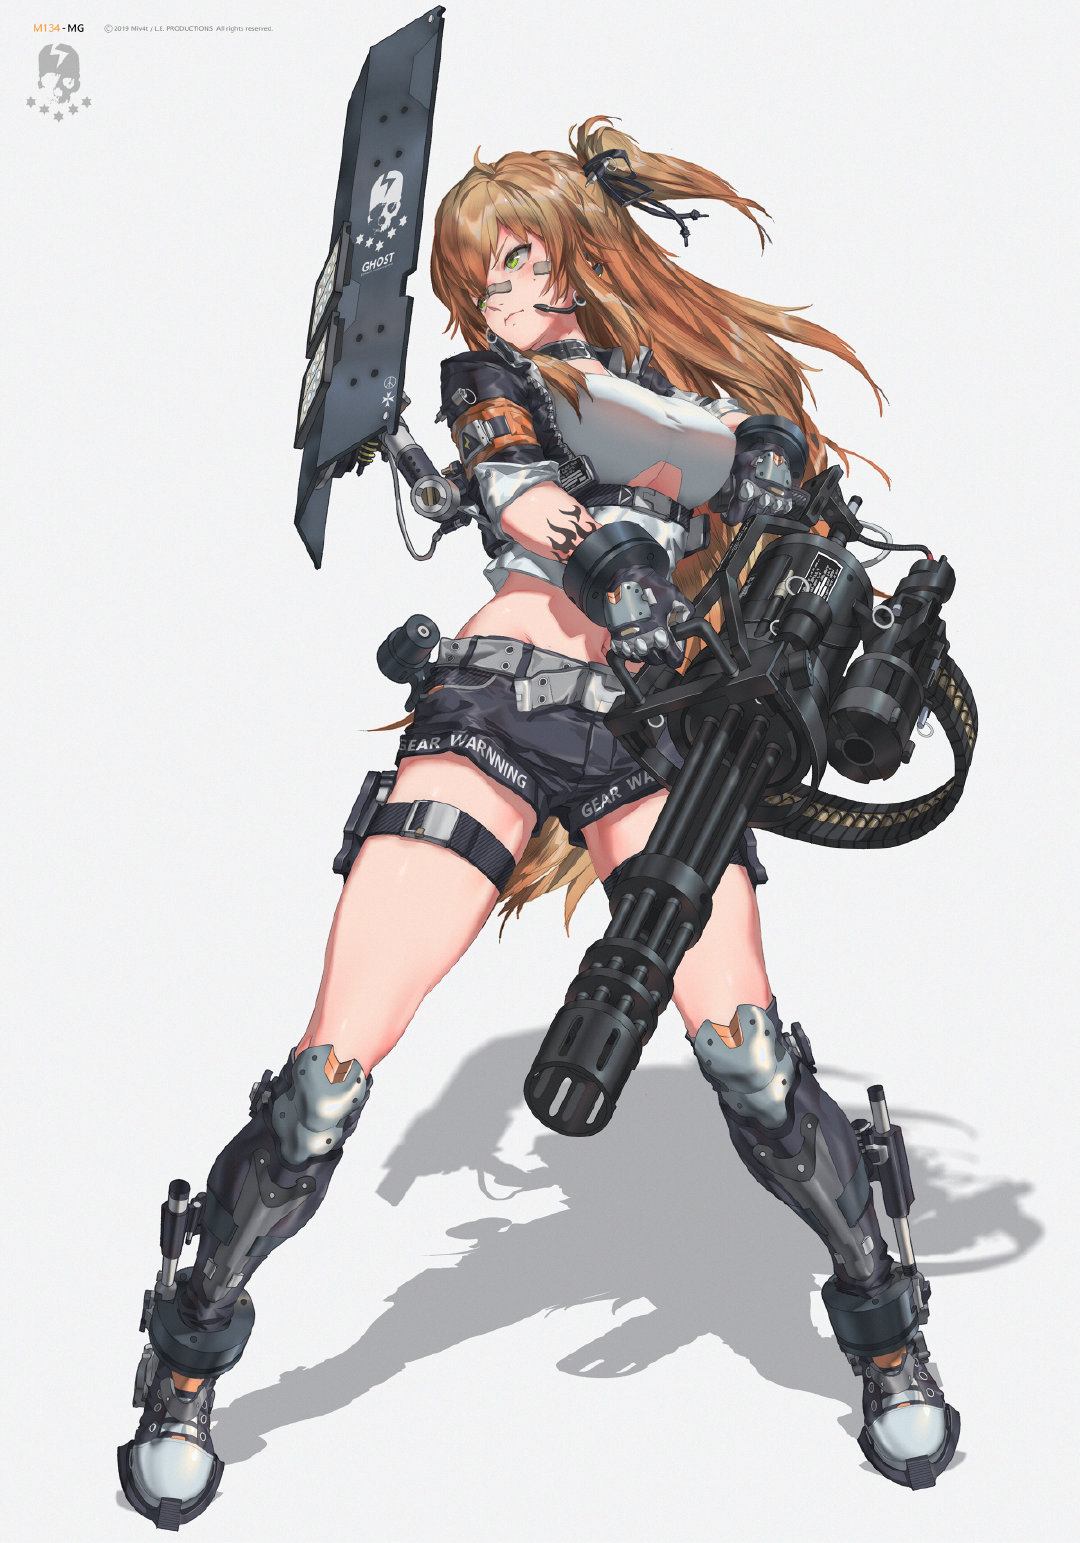 Anime 1080x1543 Miv4t anime girls anime weapon machine gun futuristic